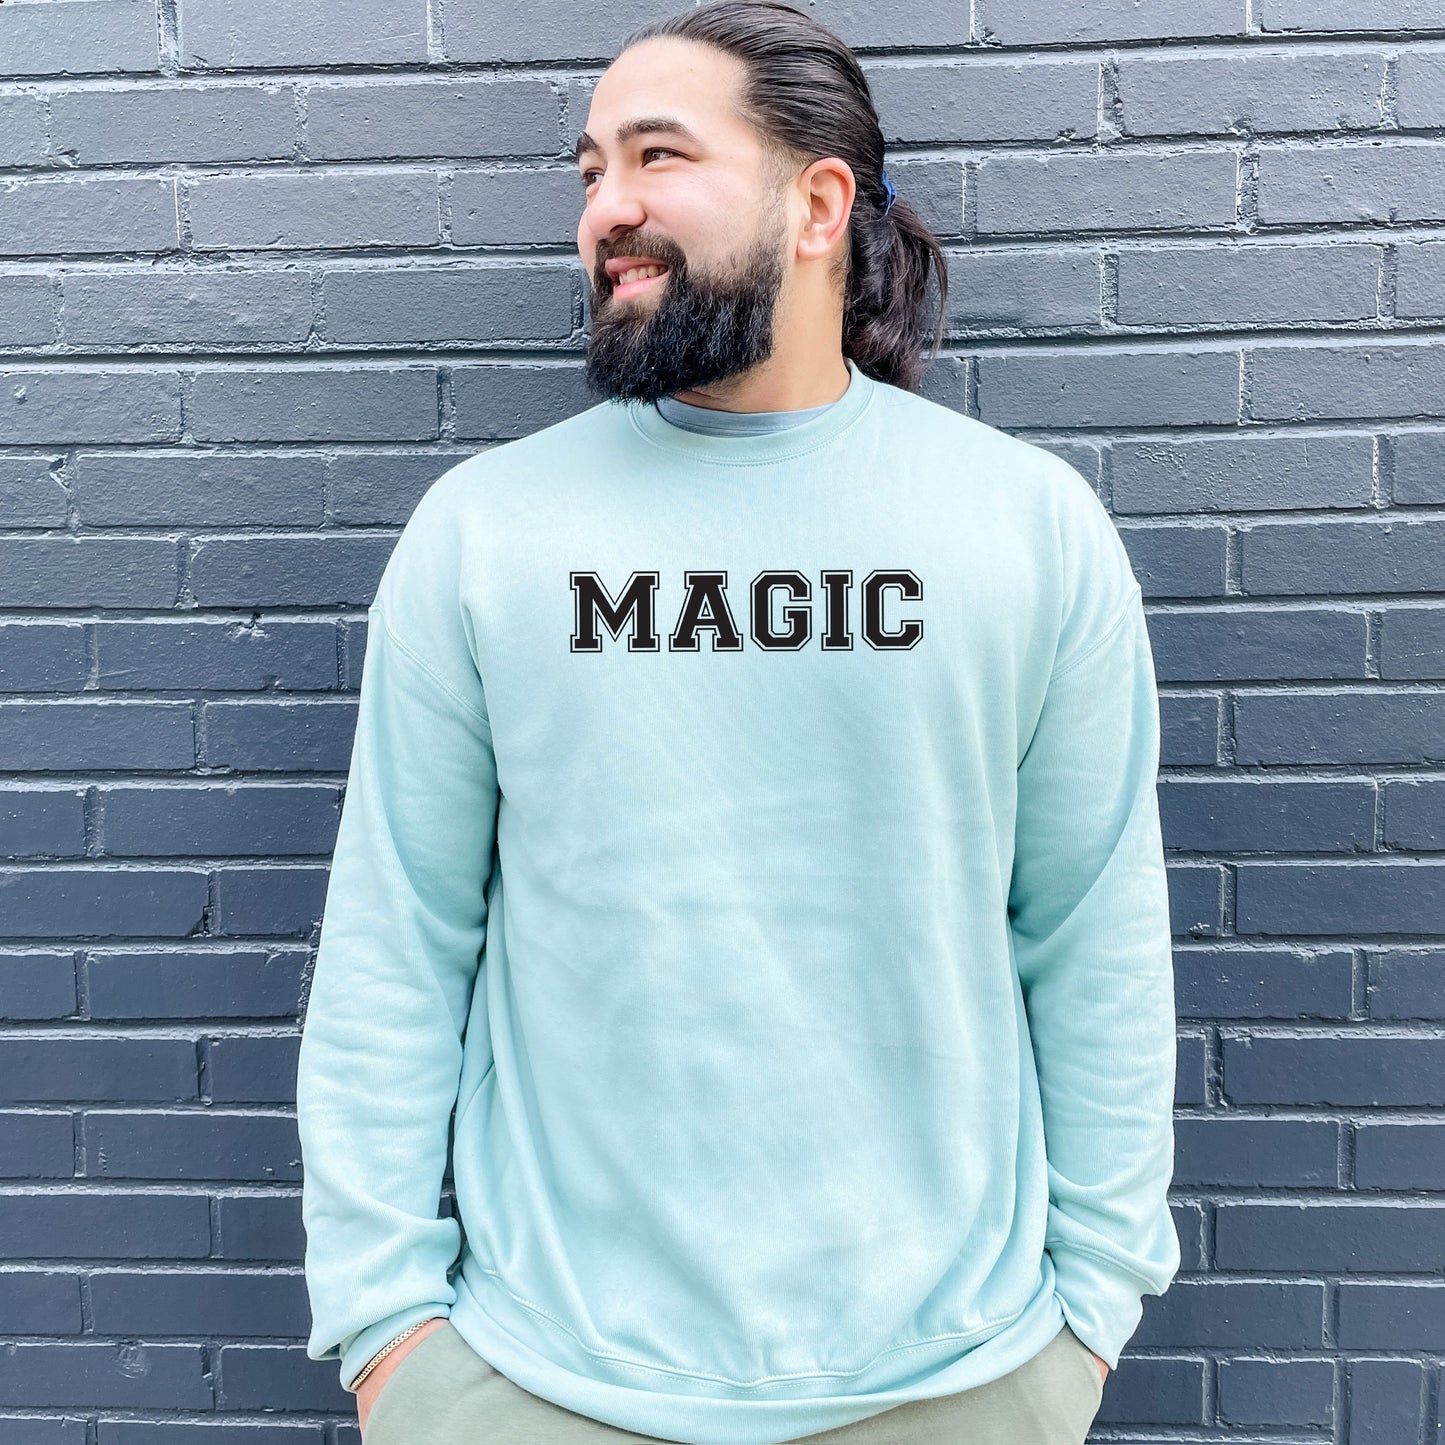 Magic - Feel Good Collection - Unisex Sweatshirt - Heather Gray or Dusty Blue